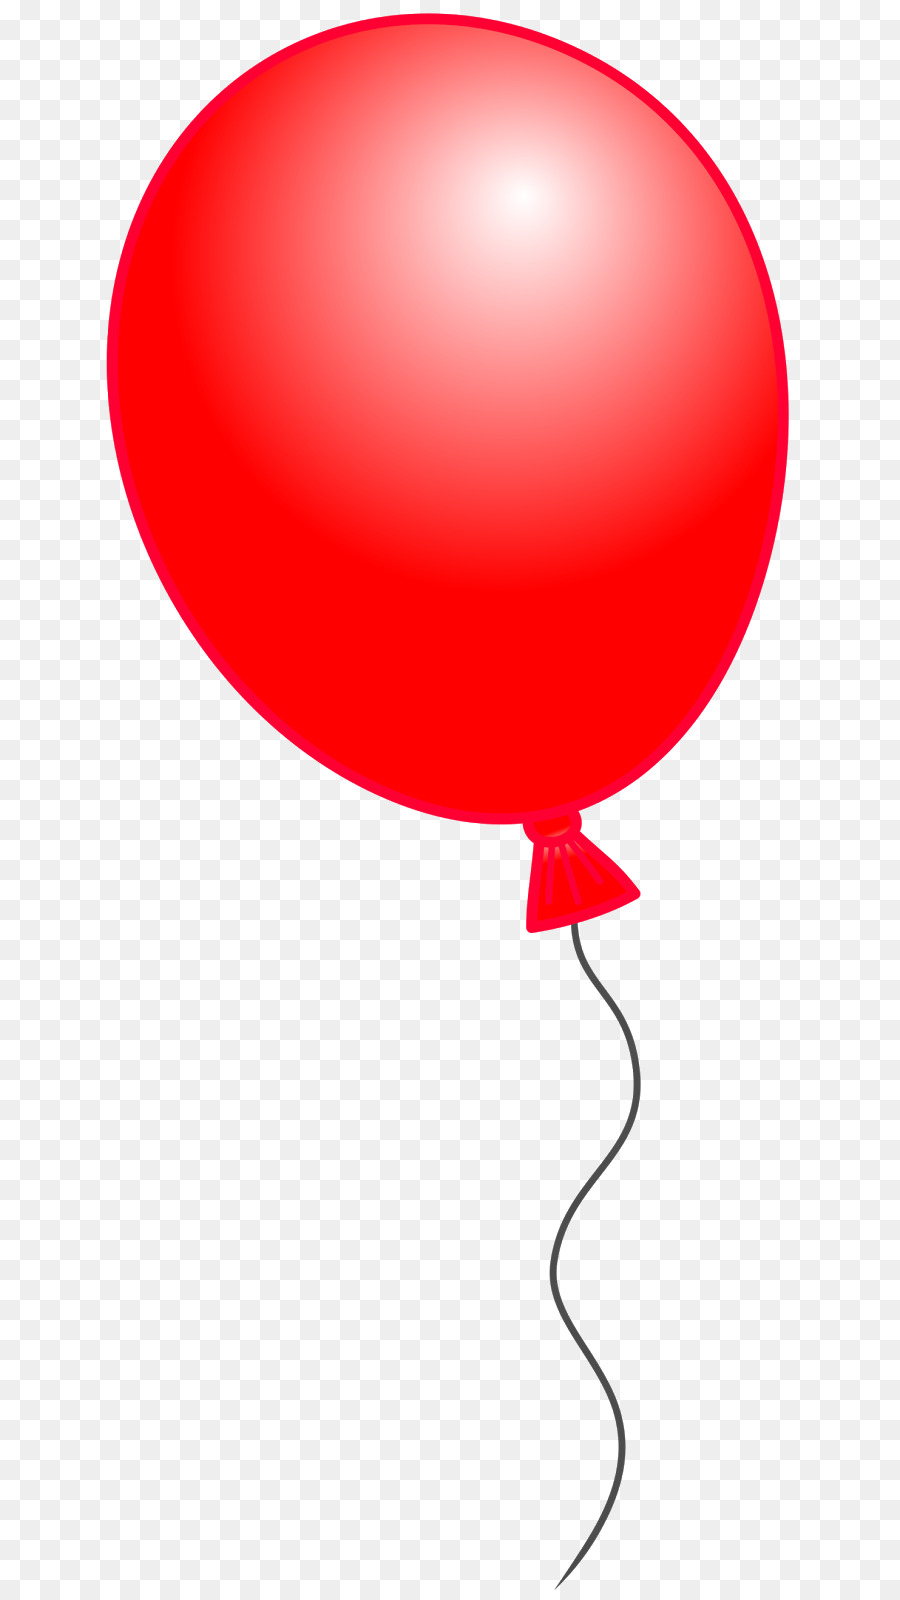 Balloon Clip art - Balloons Transparent Clip Art Image png download ...